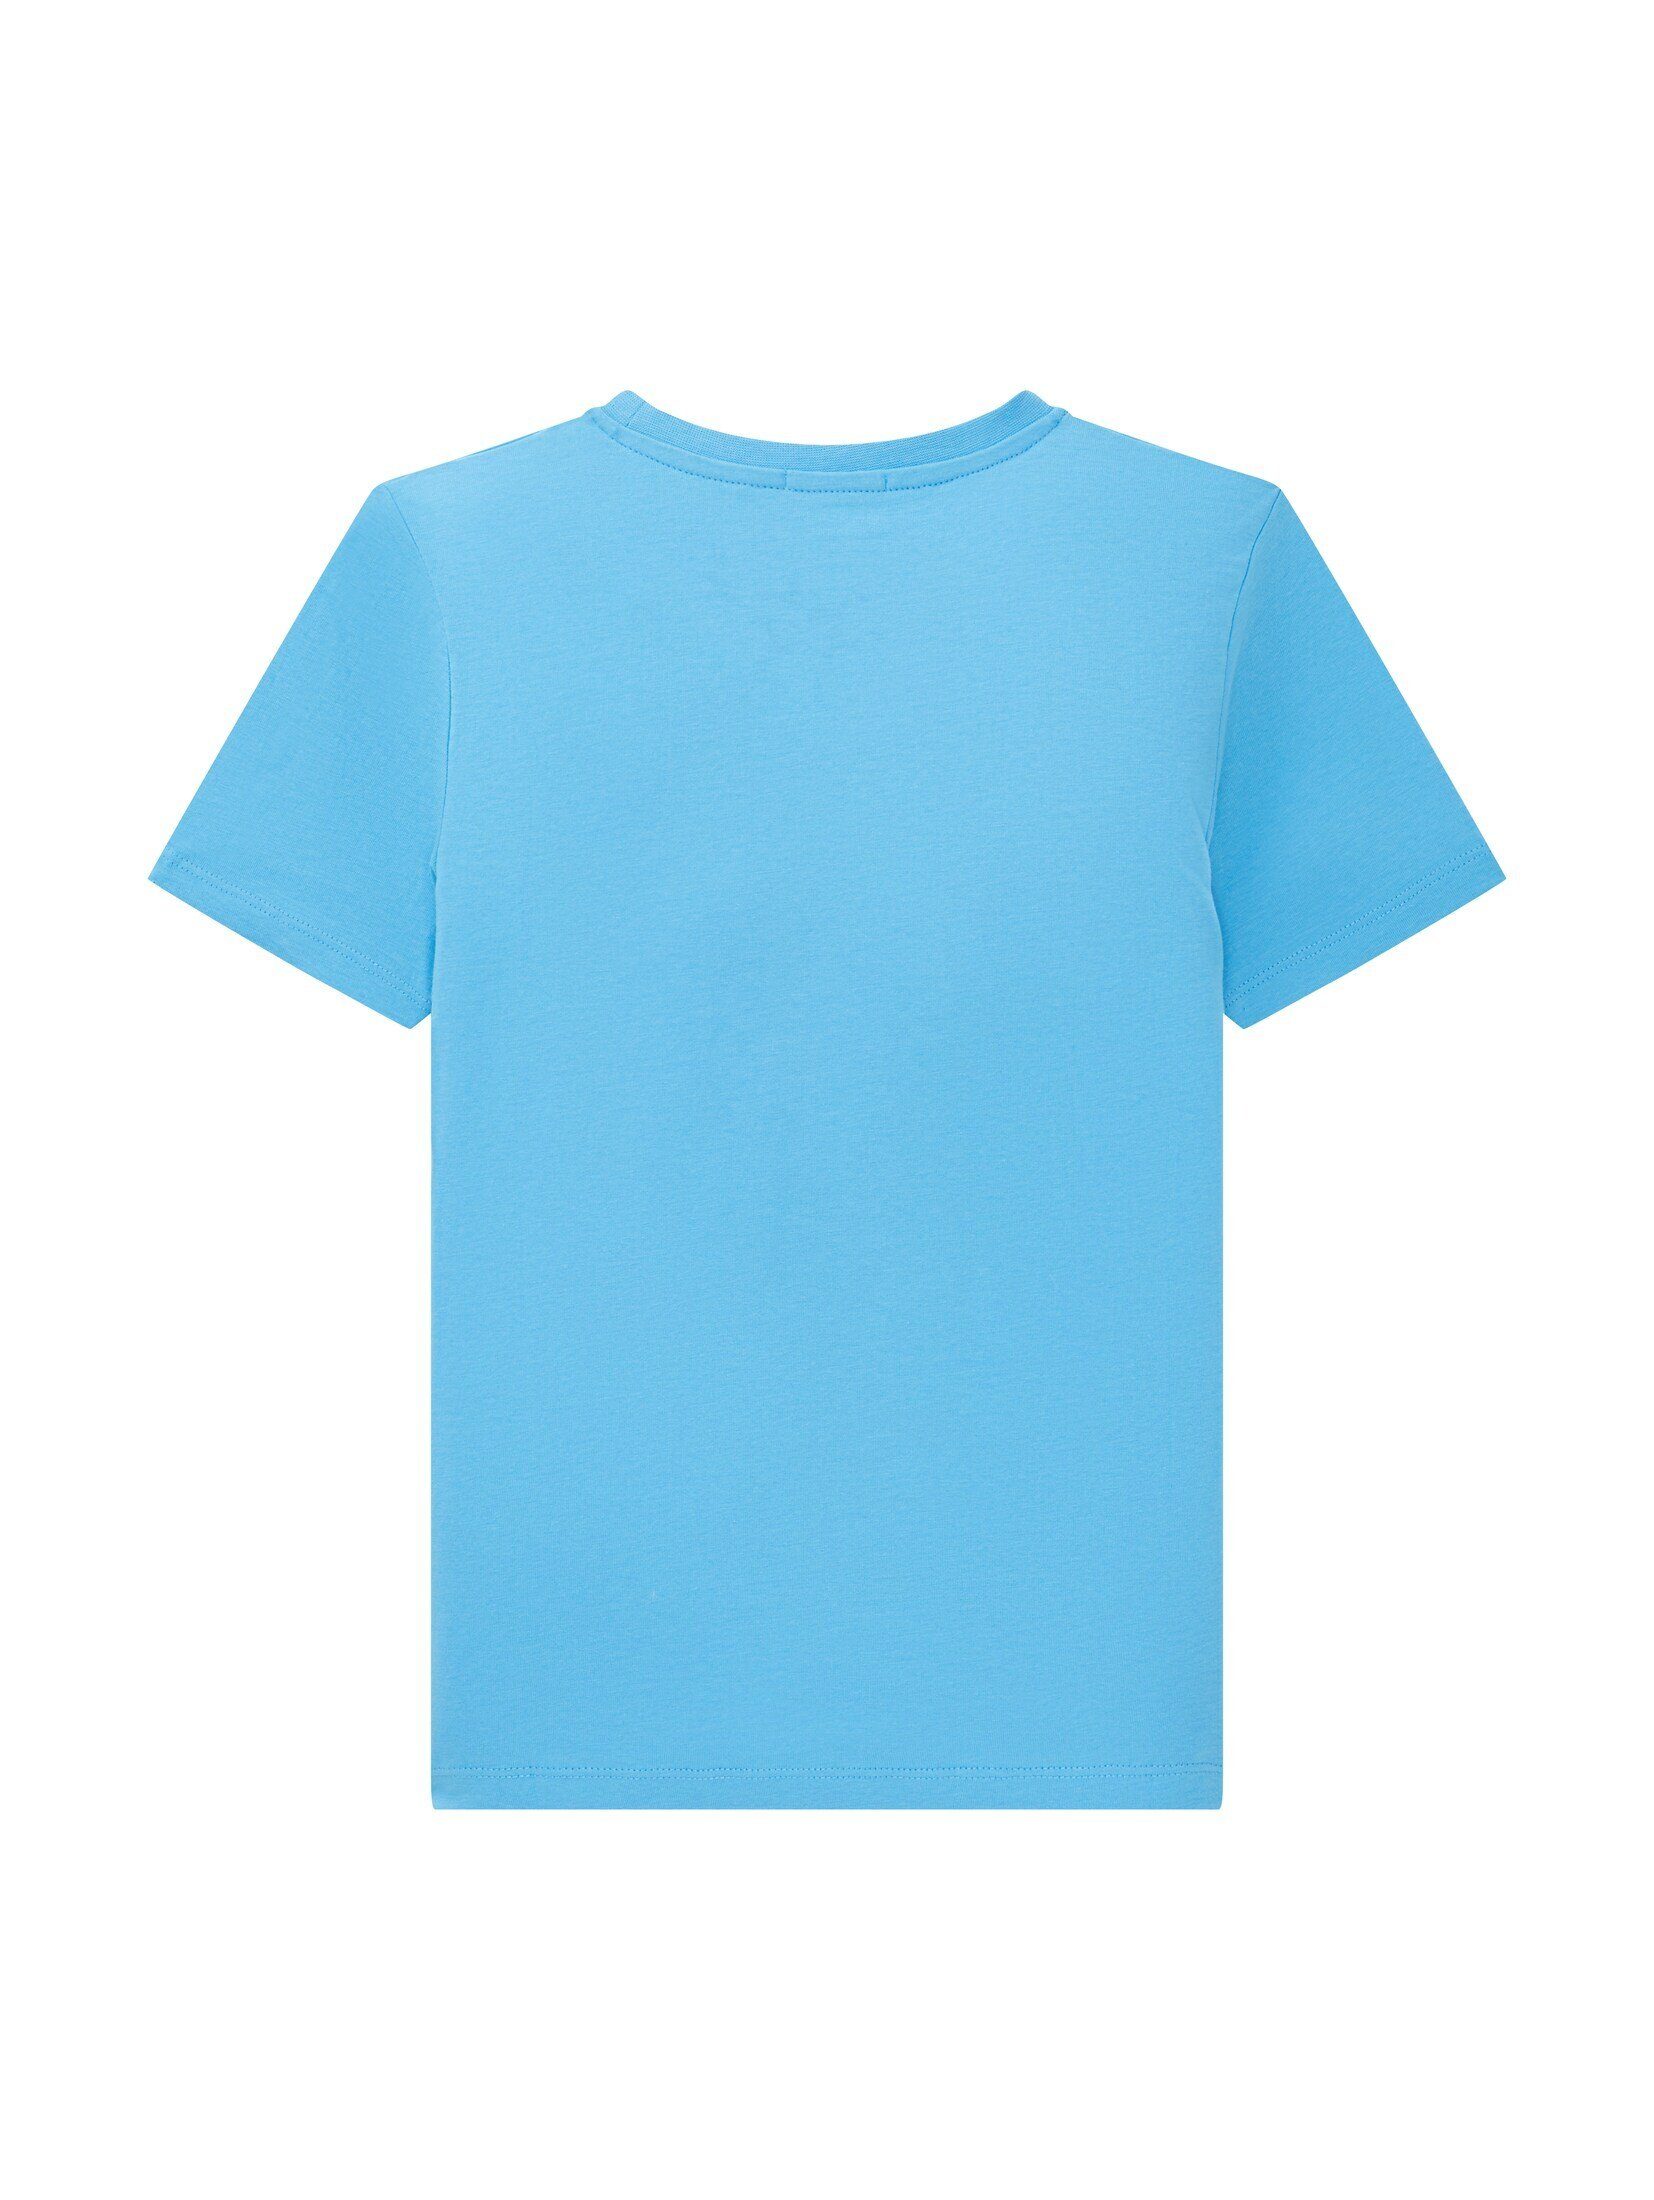 TOM TAILOR T-Shirt T-Shirt mit rainy sky Fotoprint blue